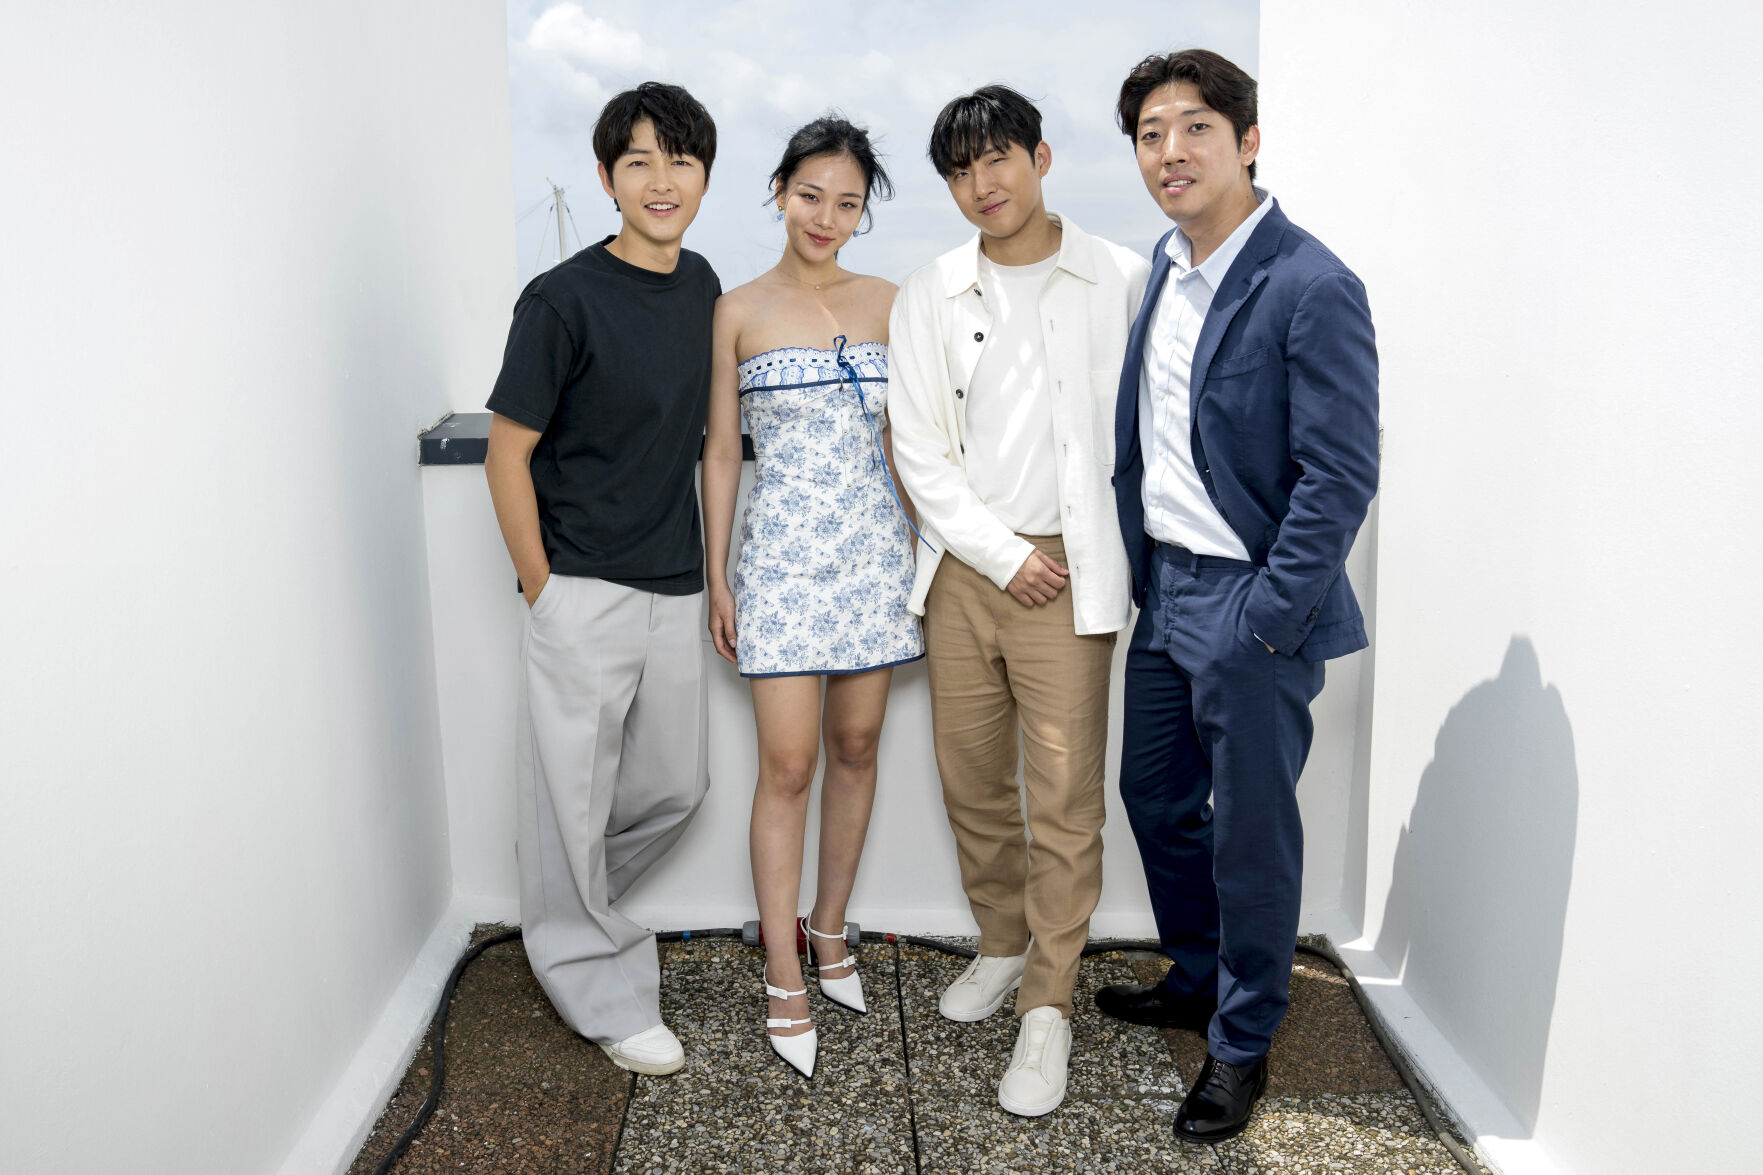 Song Joong Ki alongside Kim Hyung Seo (Bibi), Hong Sa Bin, the cast of “Hopeless,” and director Kim Chang Hoon